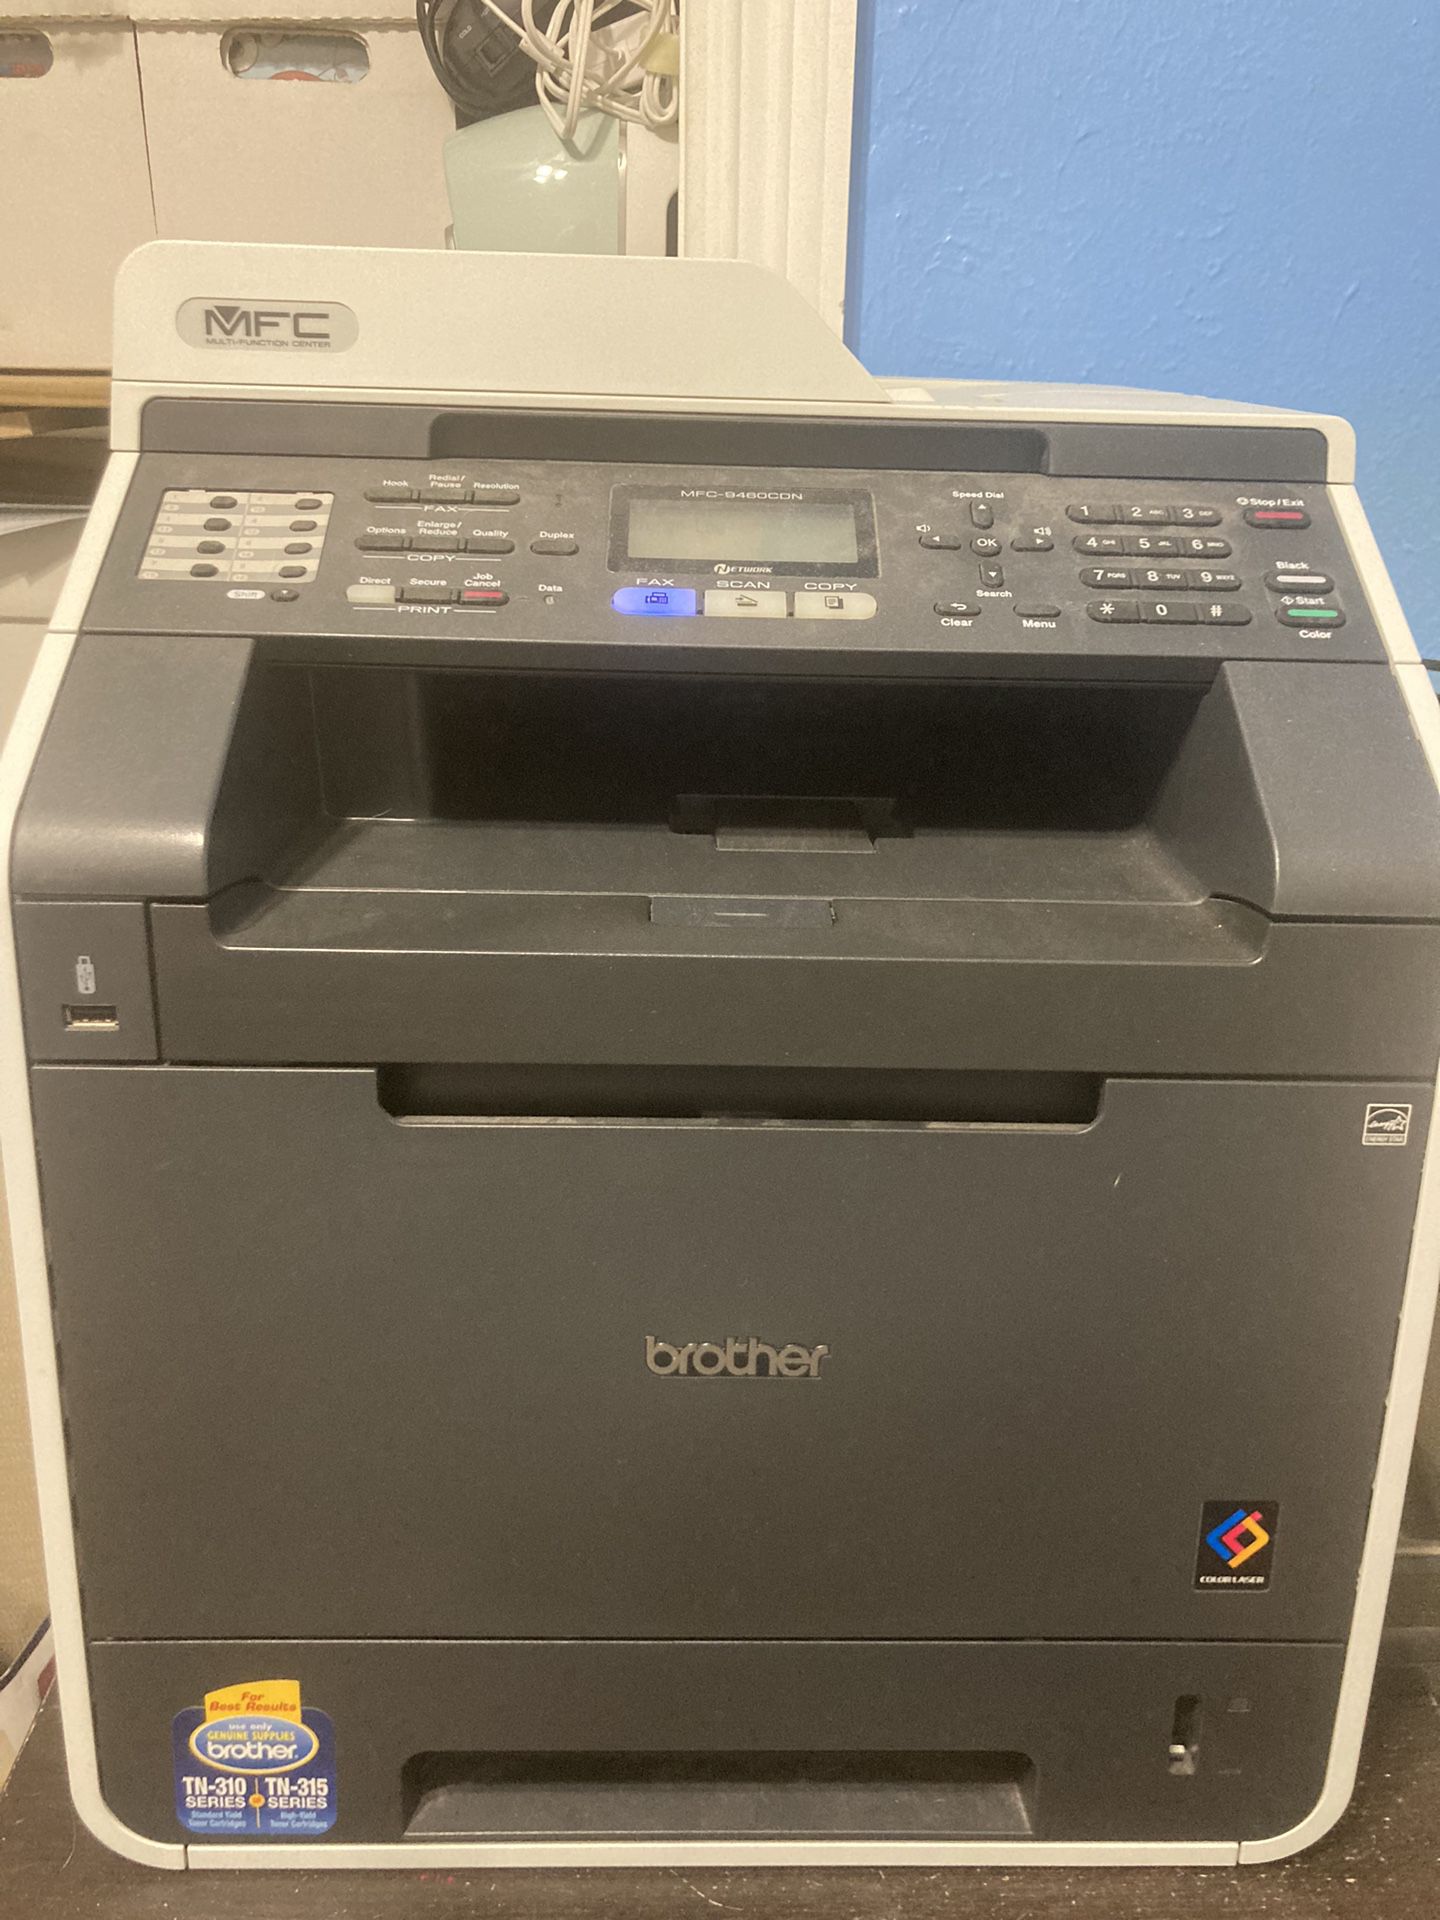 Brother MFC9460CDN multifunction printer/scanner/fax Color Laser Printer